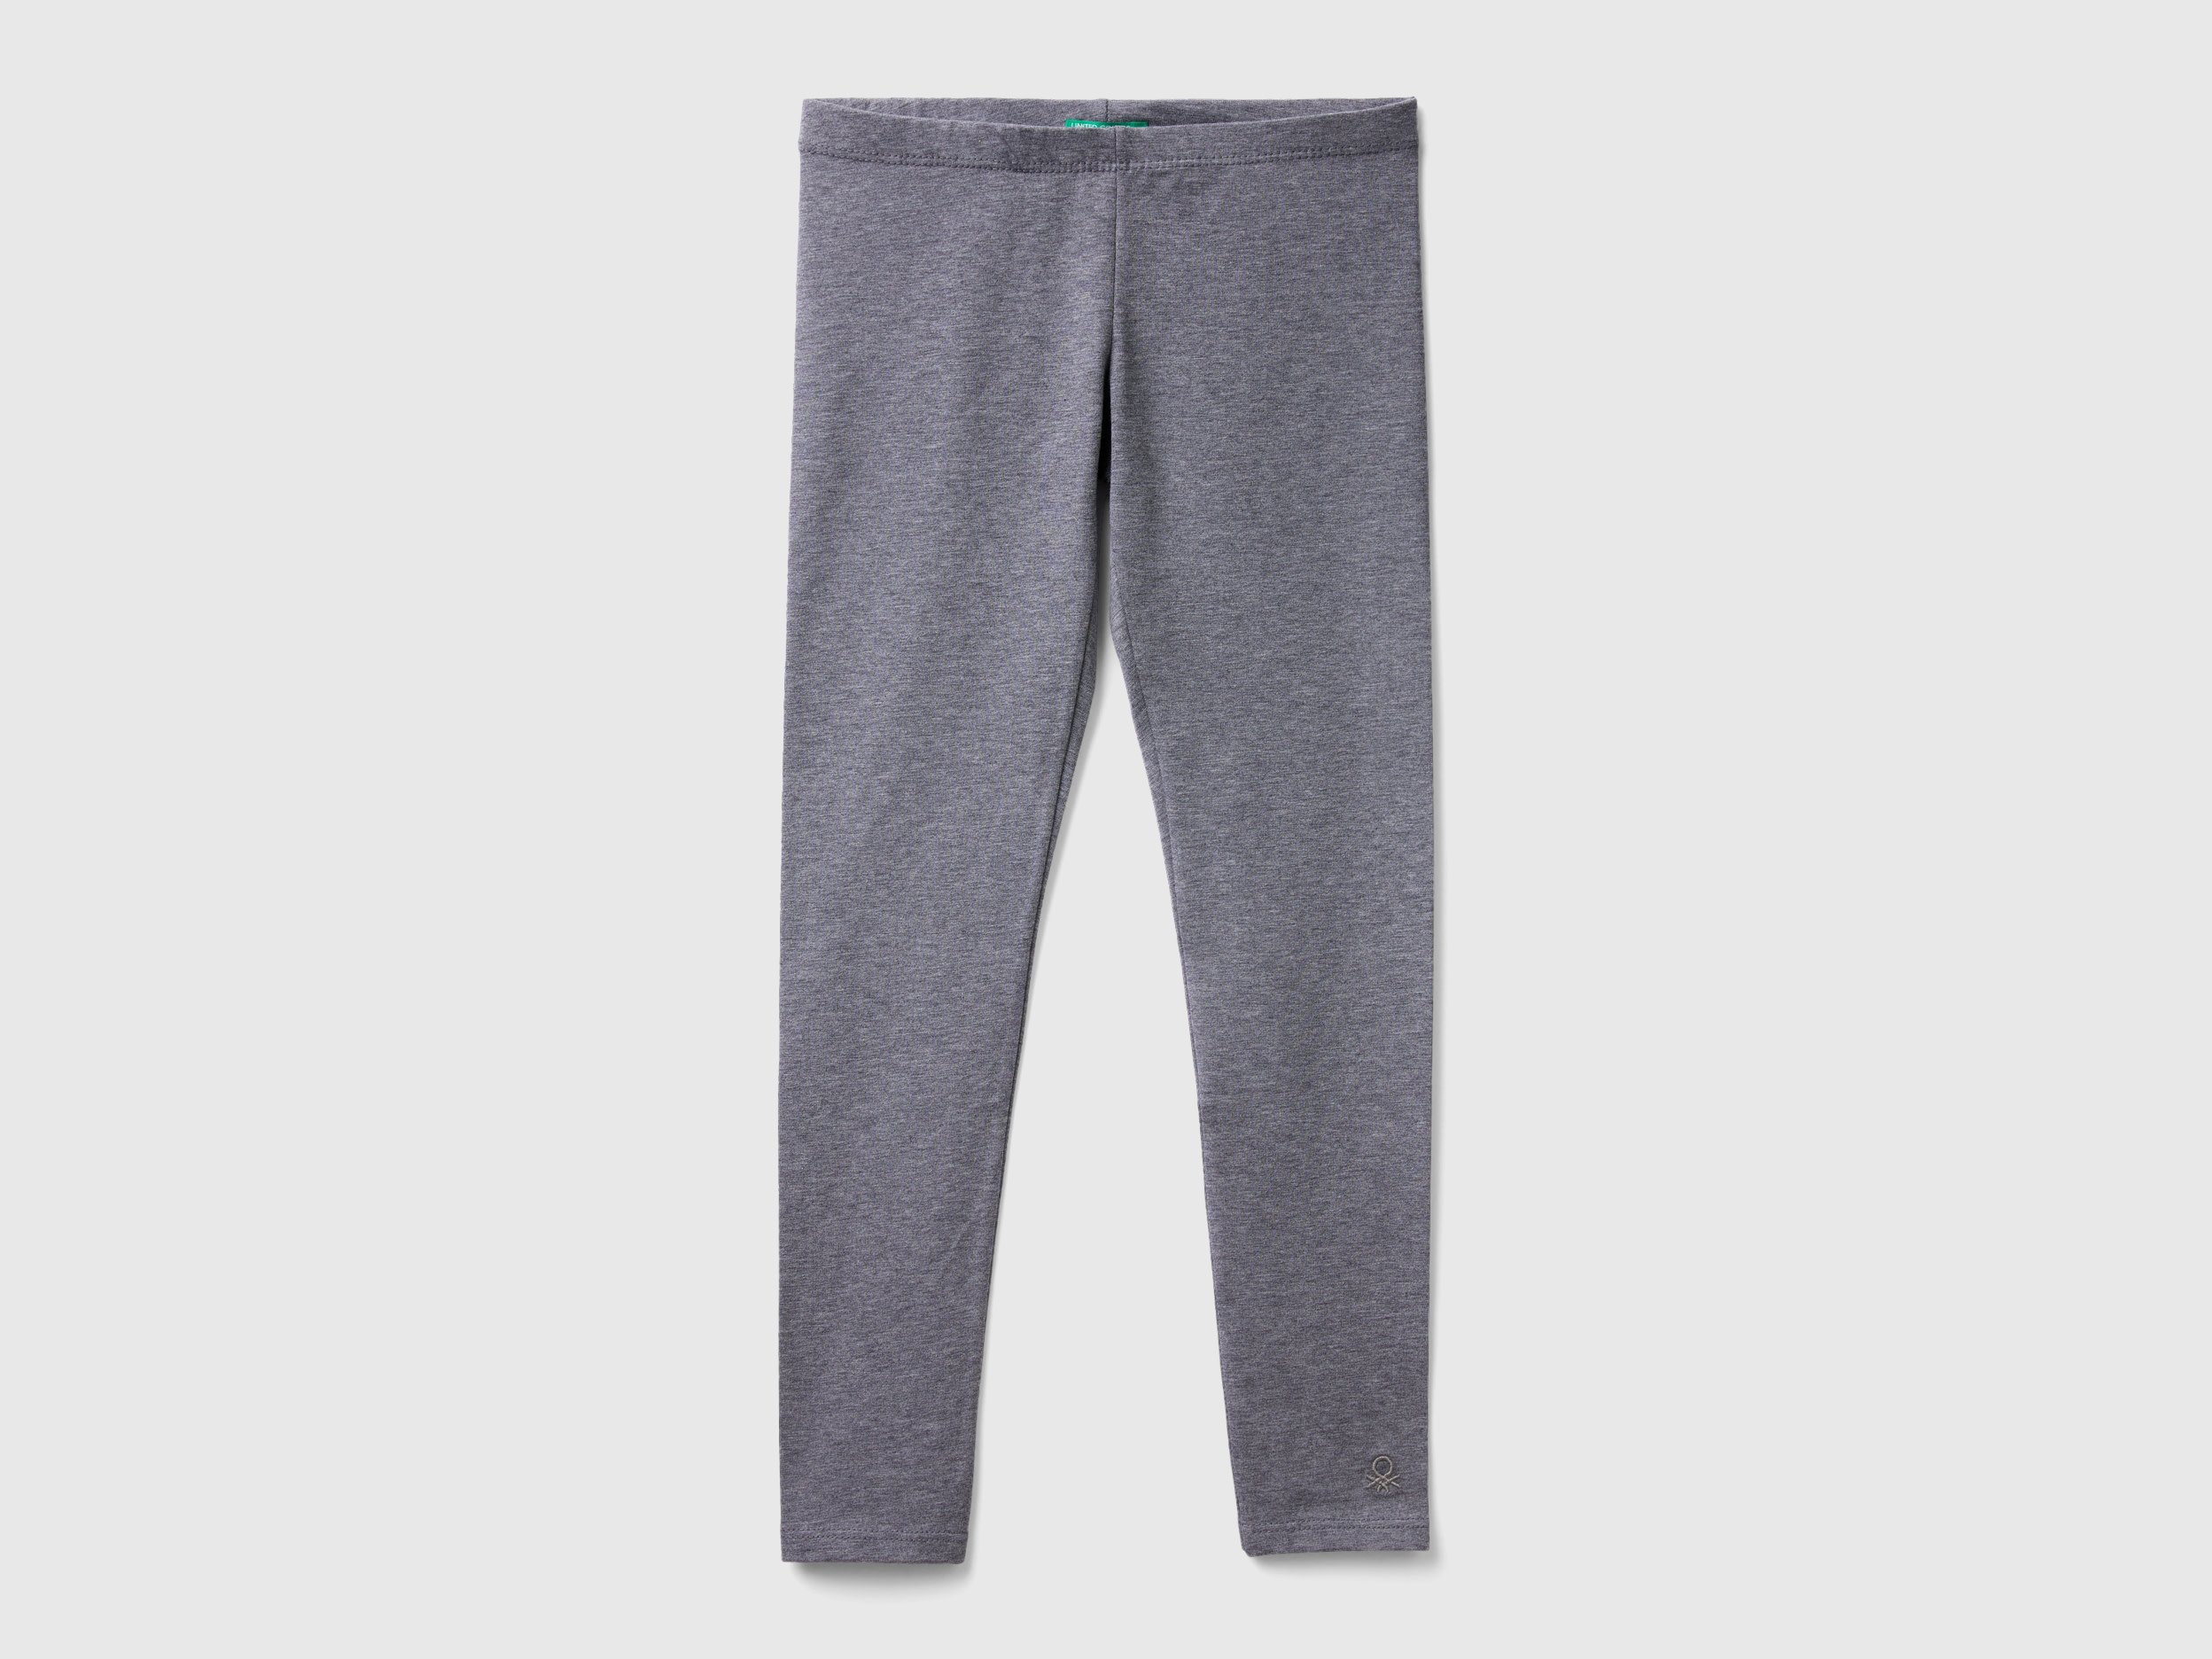 Benetton, Leggings In Stretch Cotton With Logo, size 2XL, Dark Gray, Kids